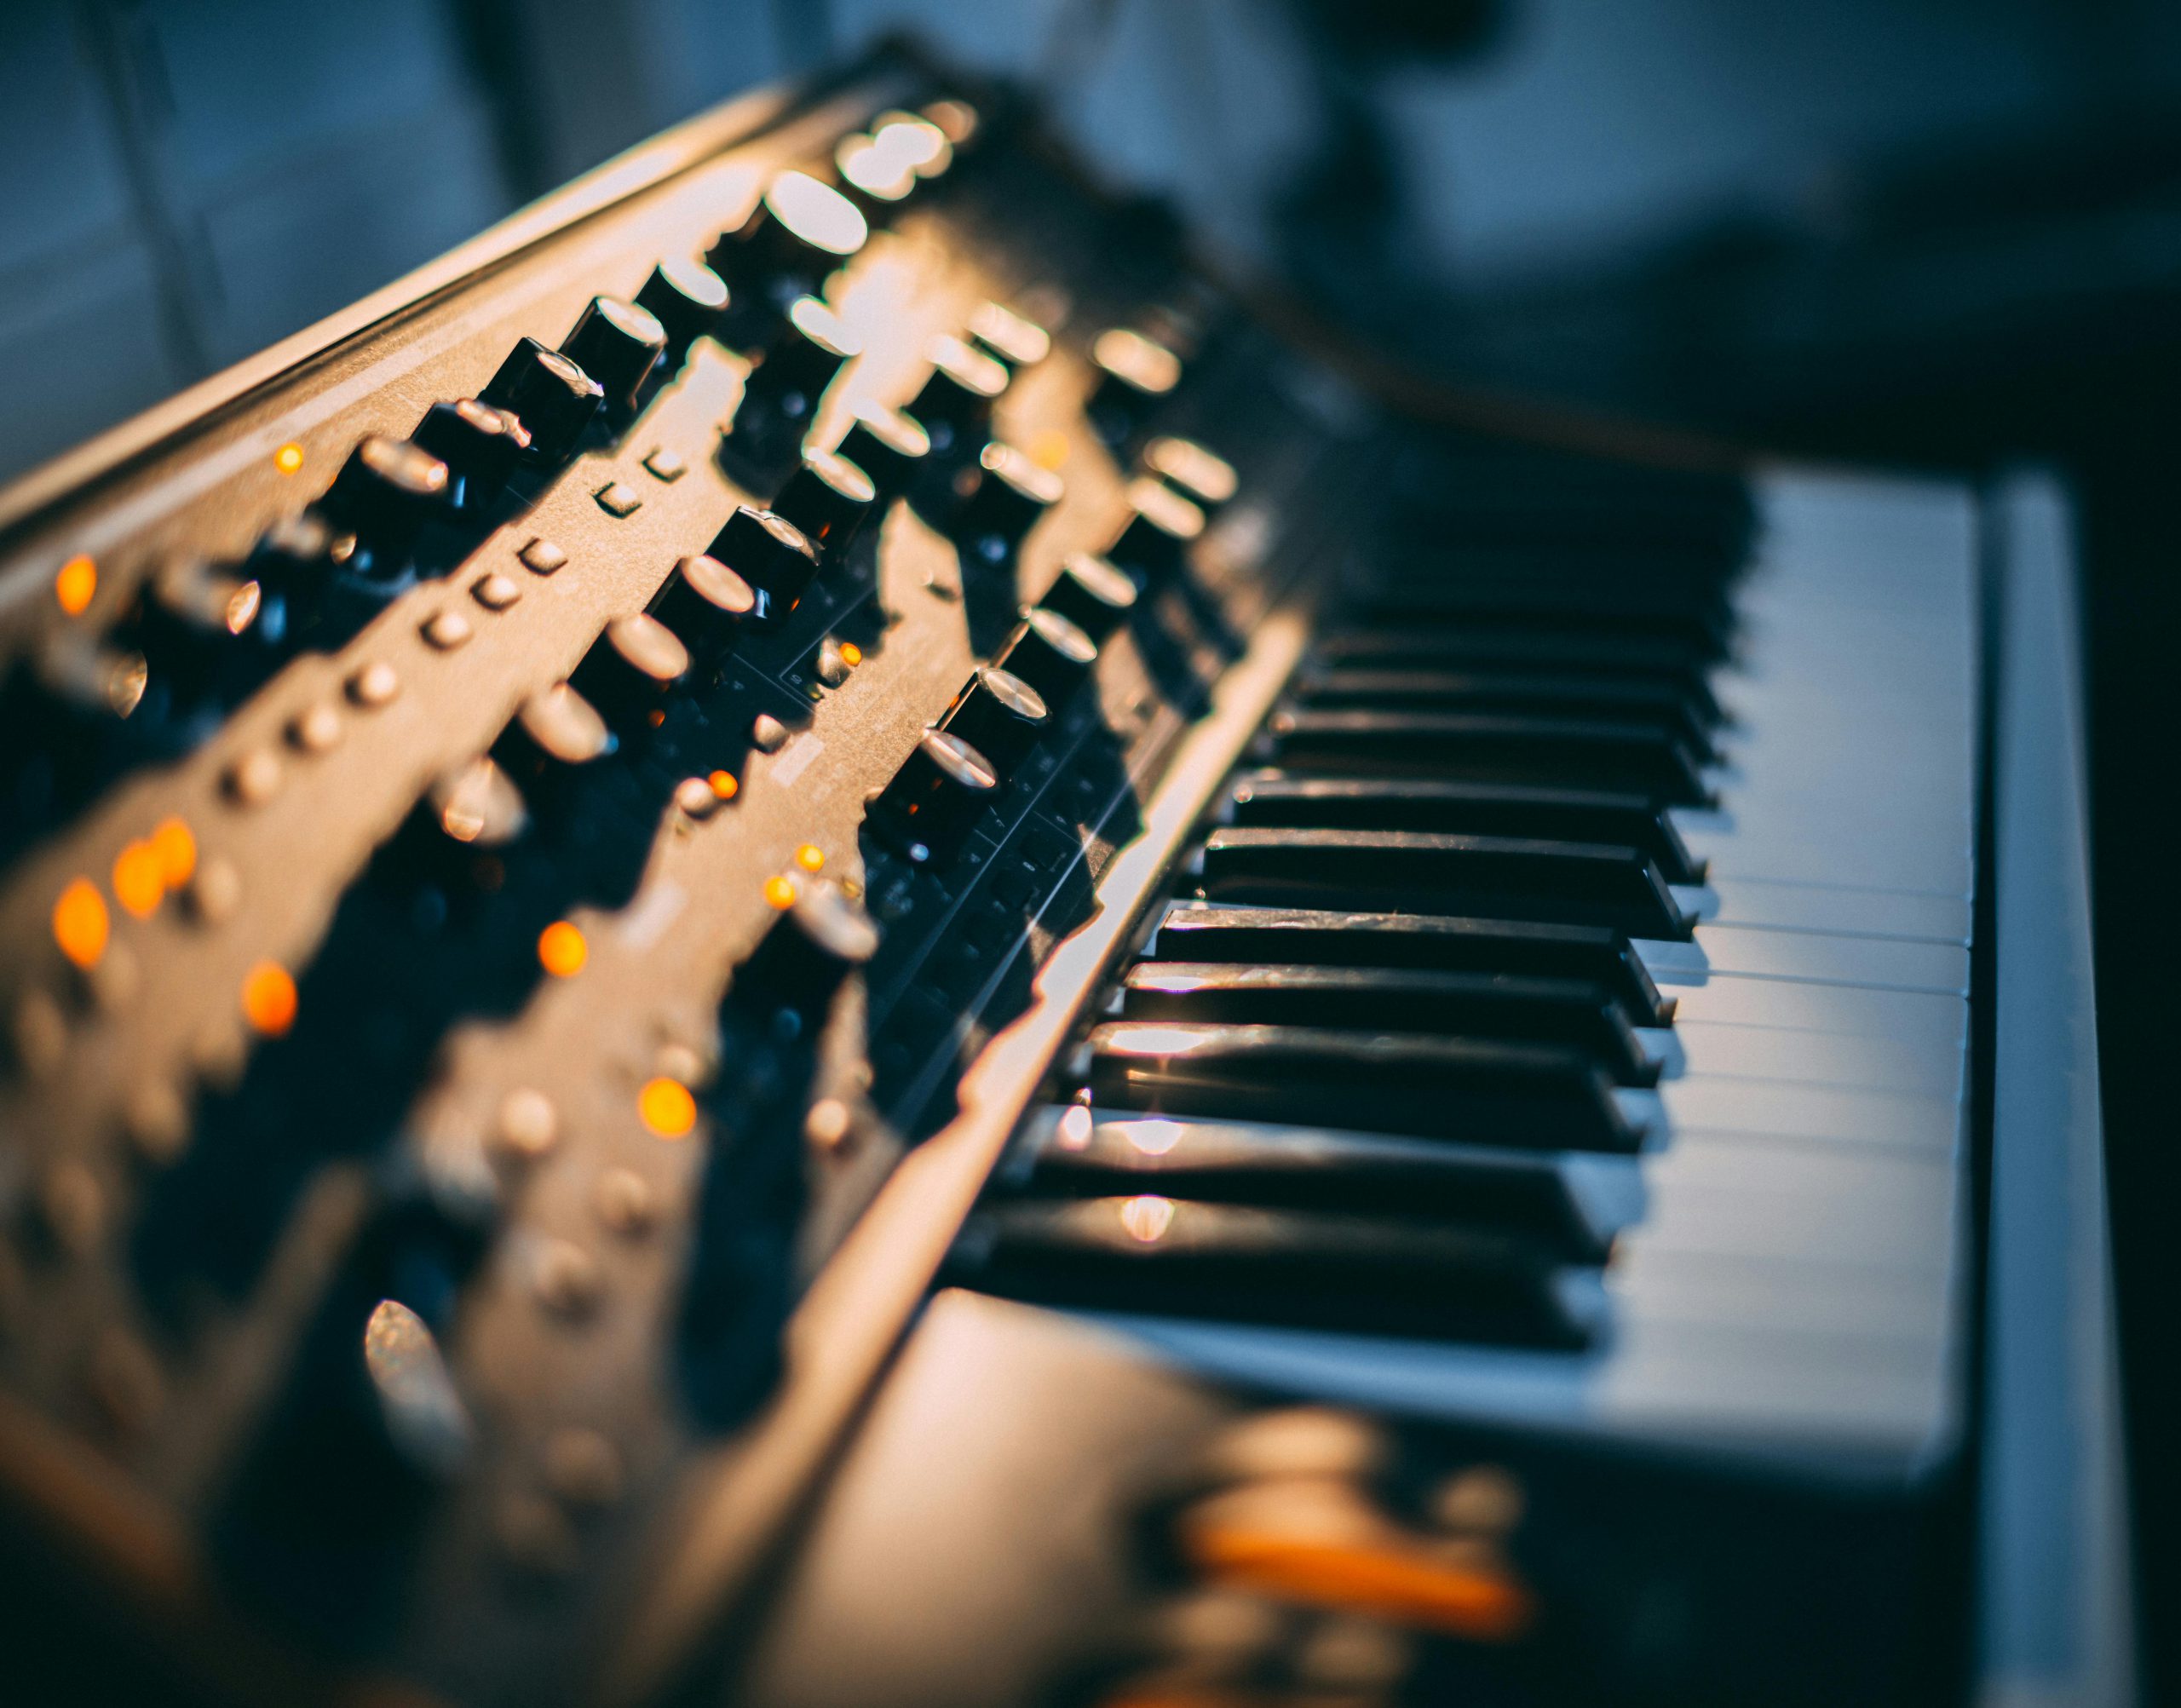 analog synthesizer - music gear